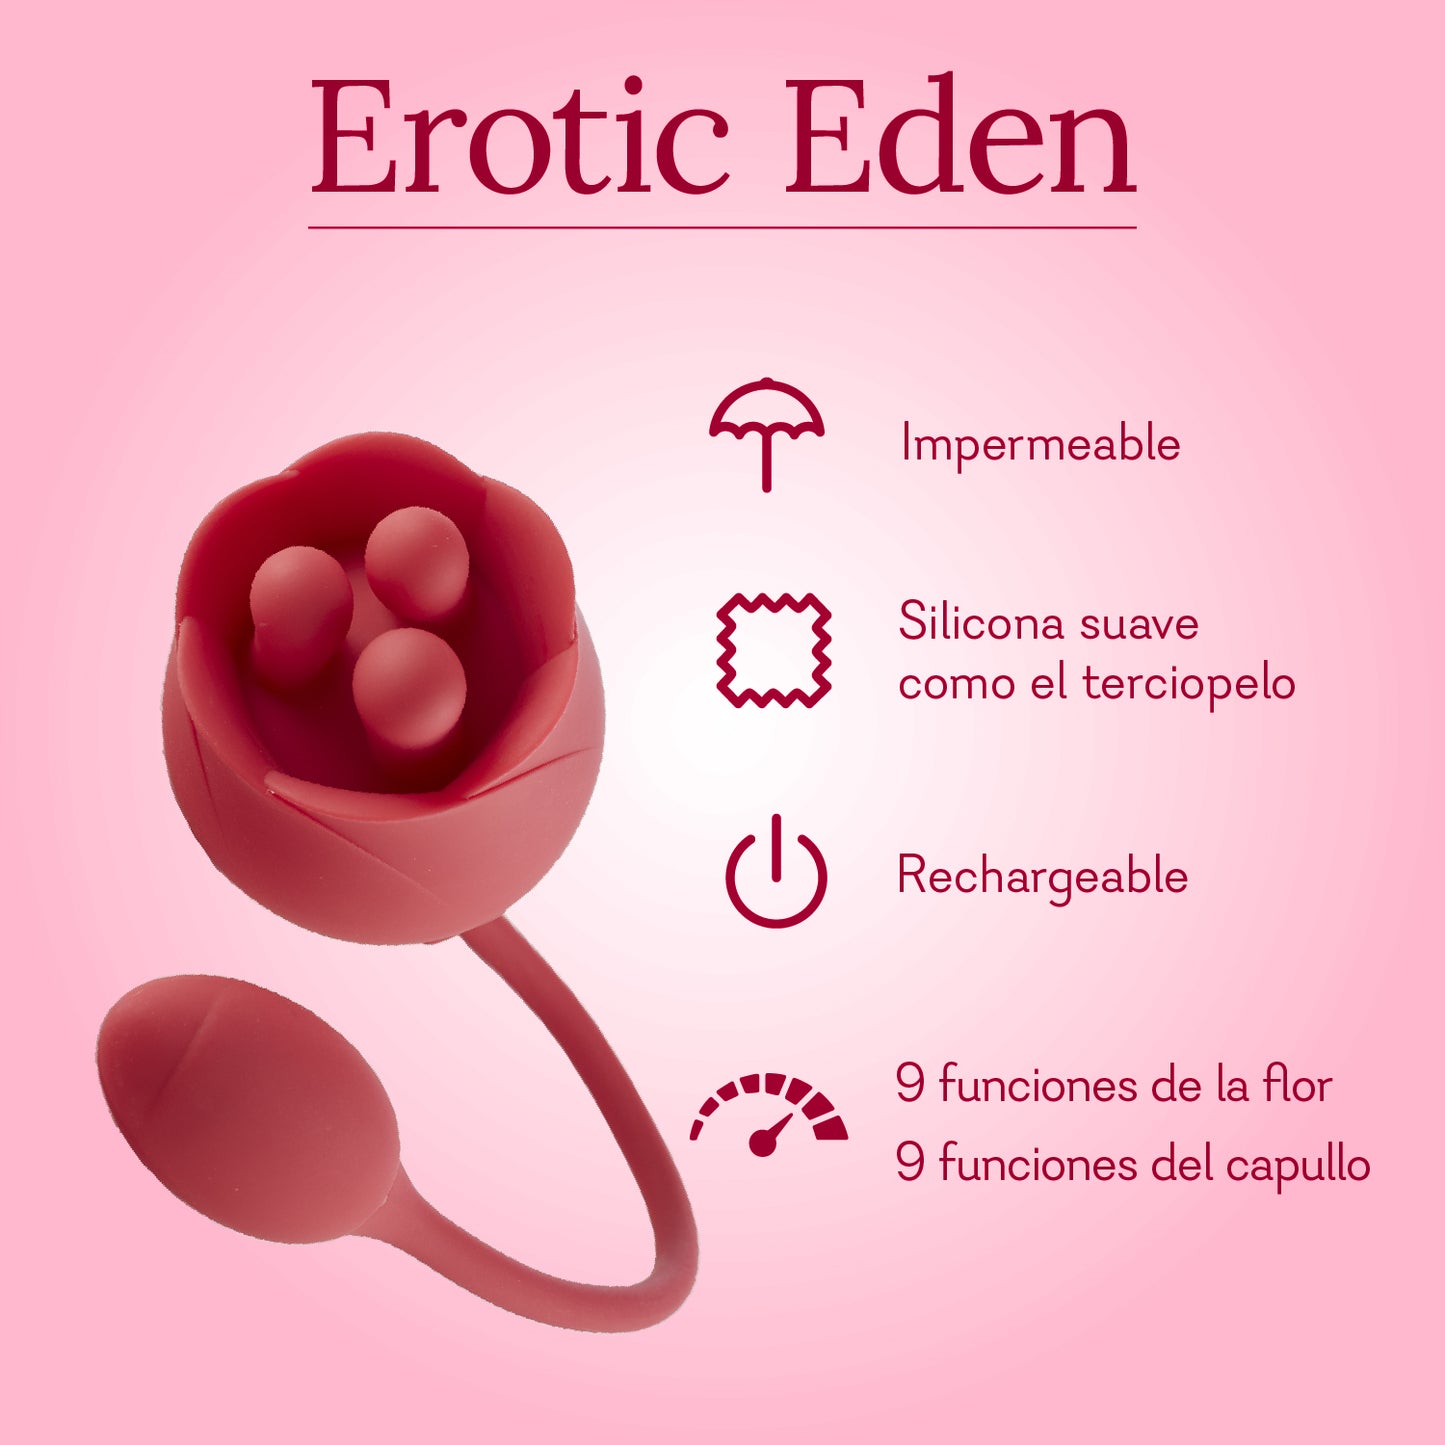 Erotic Eden Rose Vibrator Infographic Spanish 2 Pure Romance